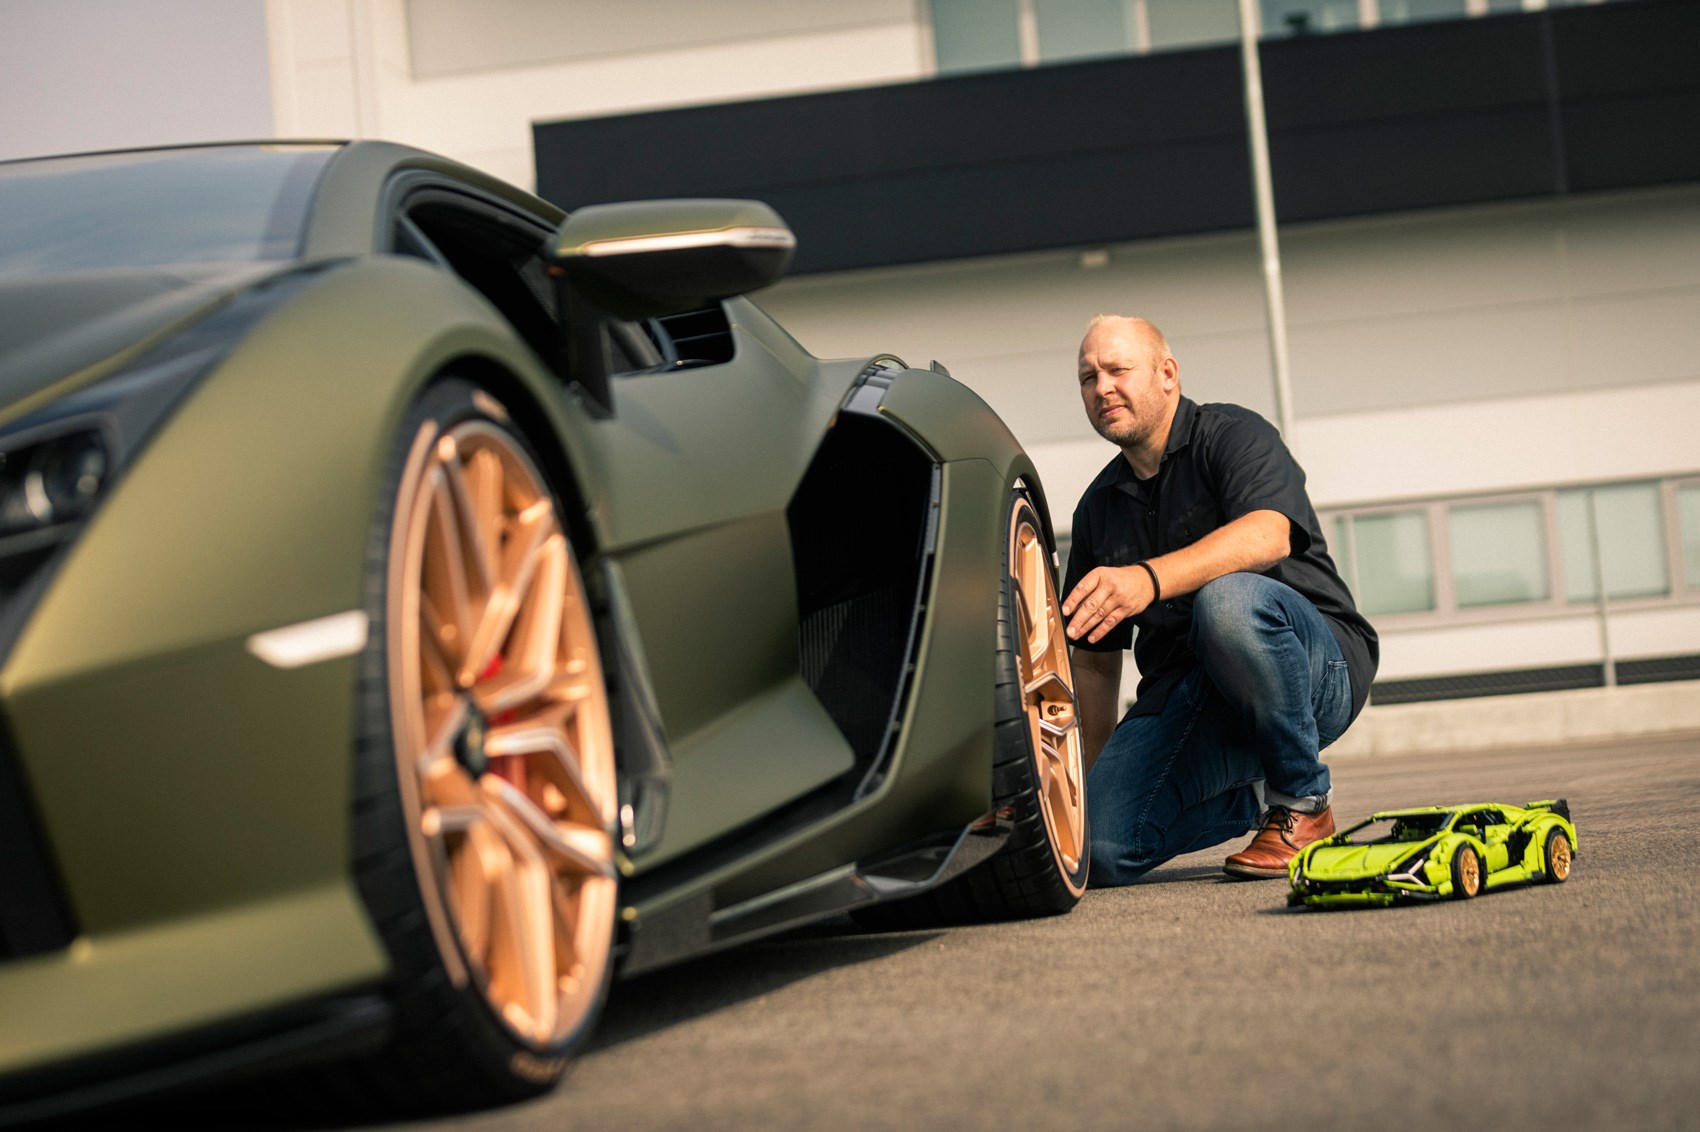 Lamborghini Sian hypercar: the CAR lowdown | CAR Magazine